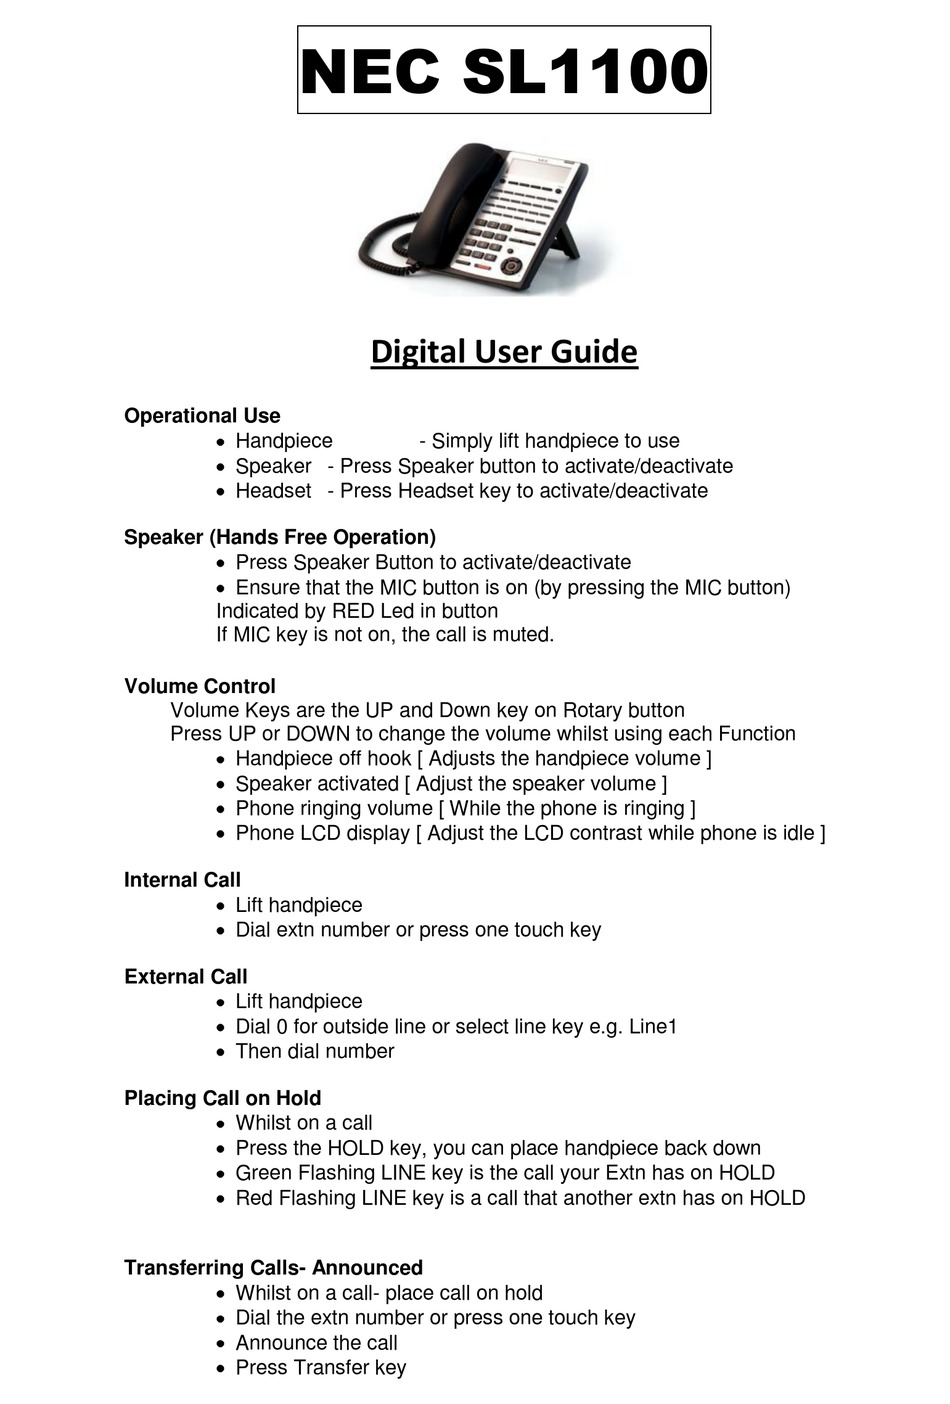 nec-sl1100-user-manual-pdf-download-manualib